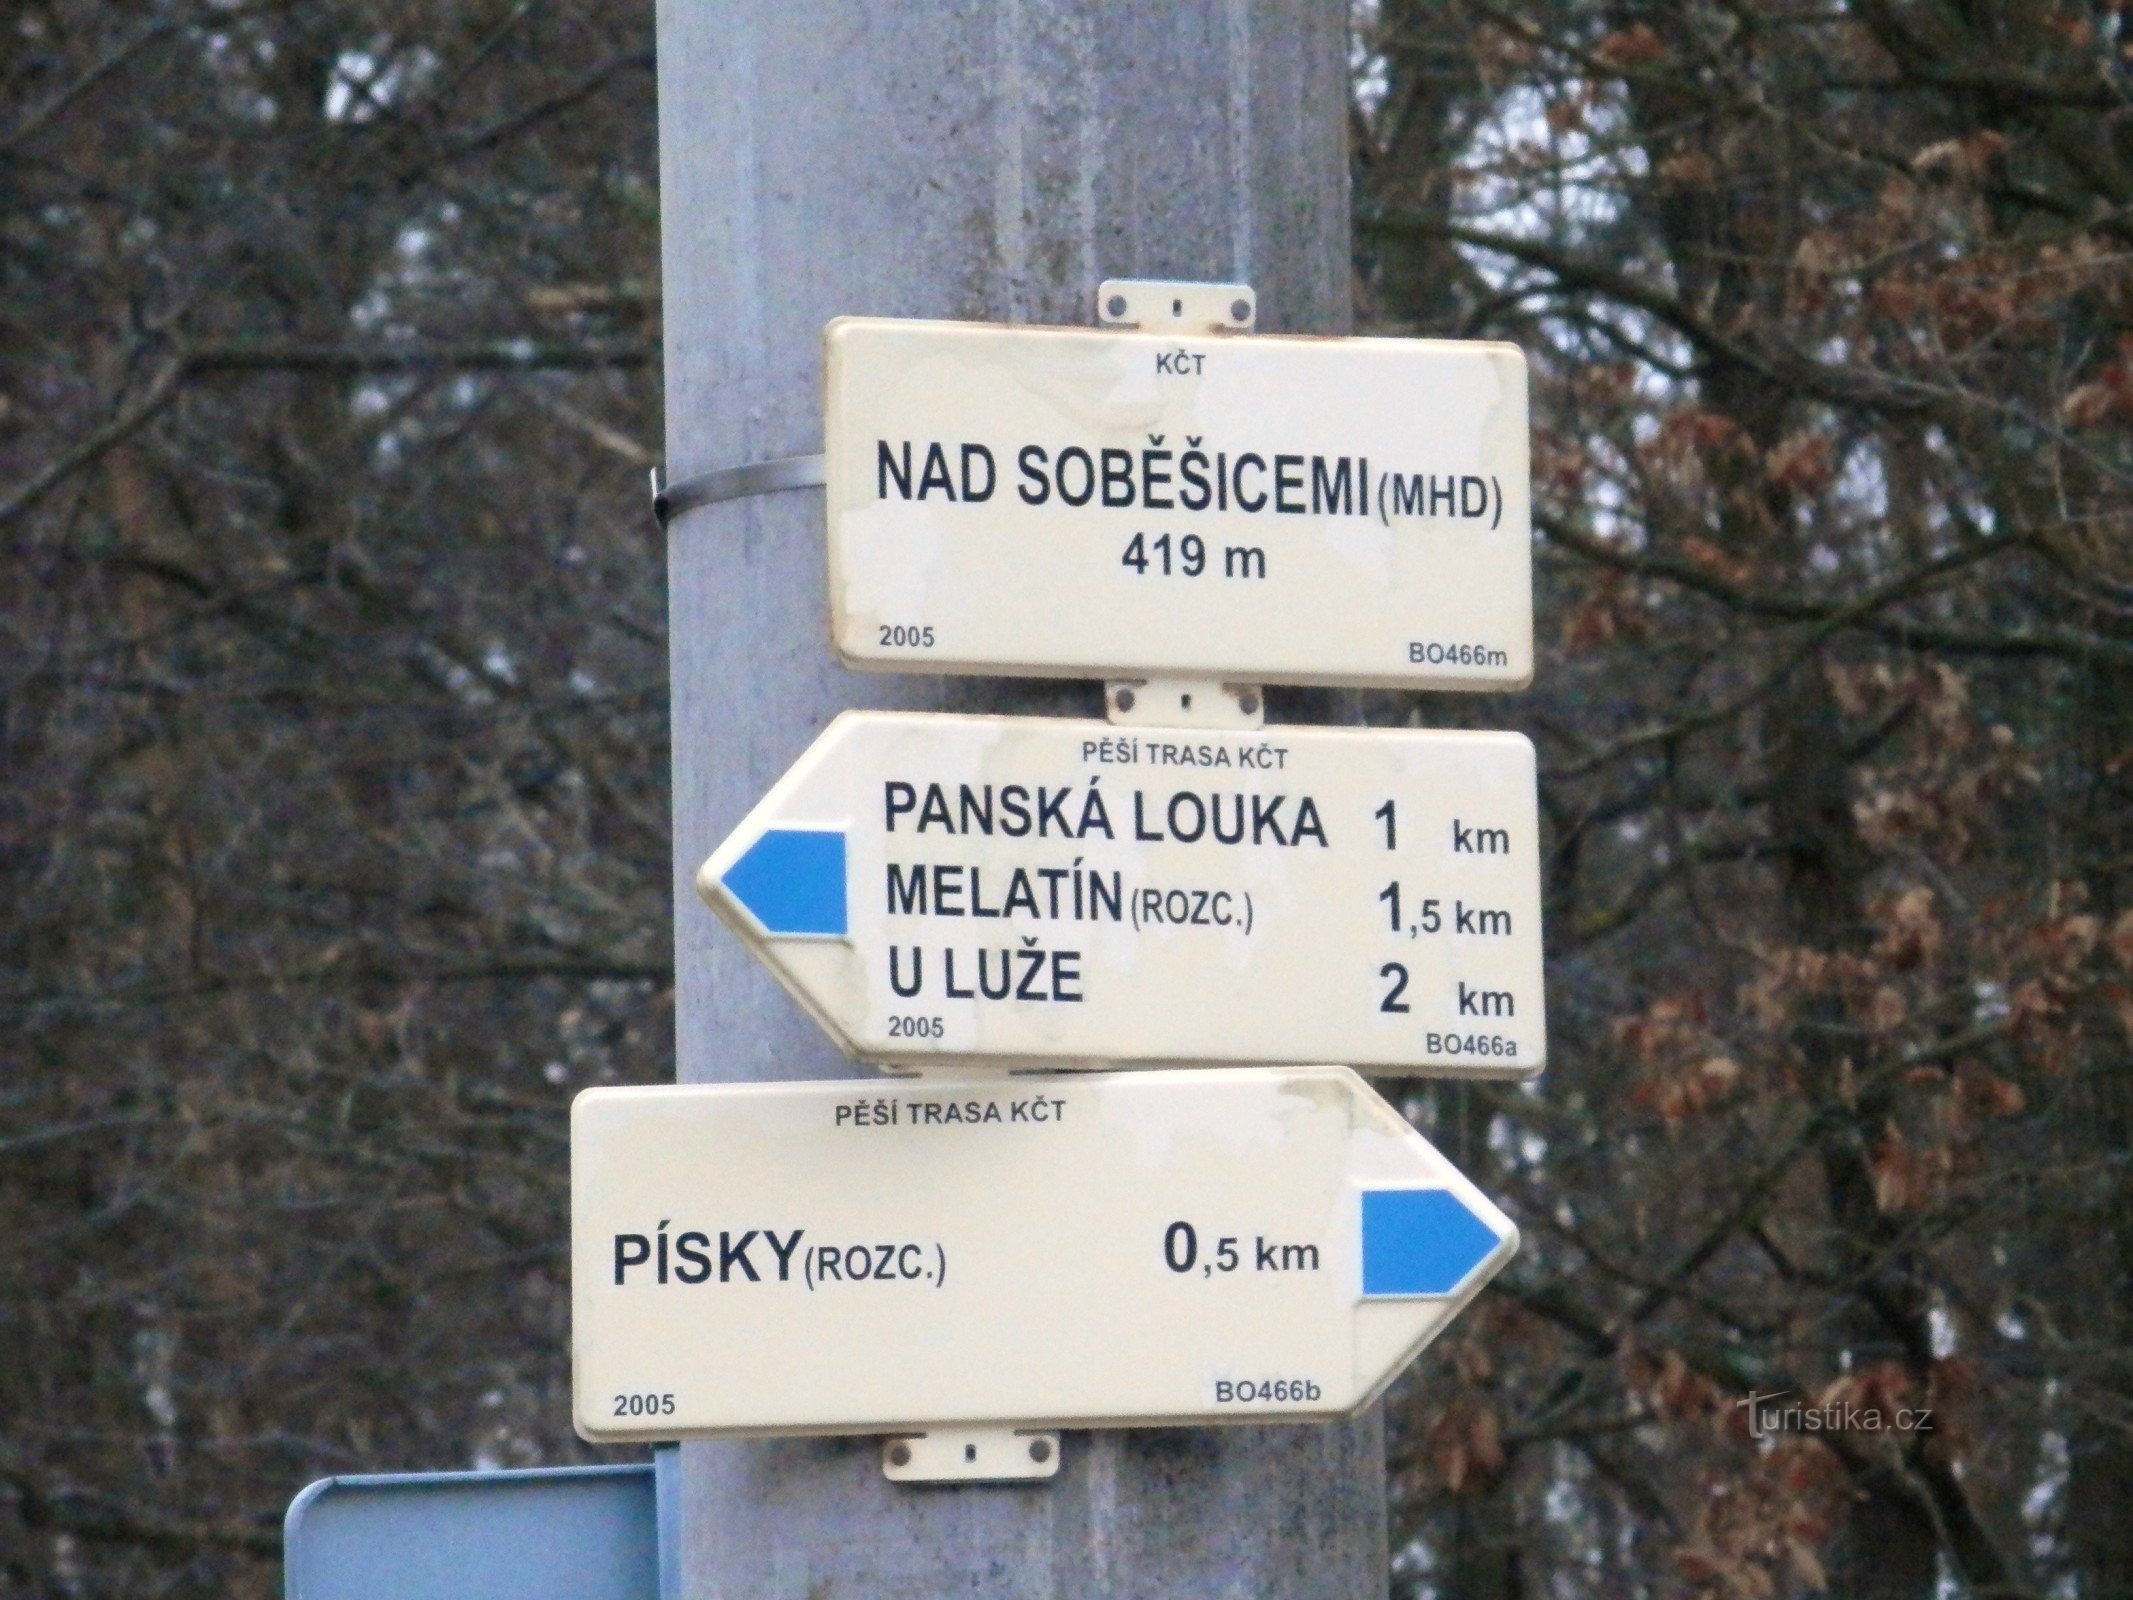 Nad Soběšicemi (公共交通機関) - マークされた観光ルートの分岐点